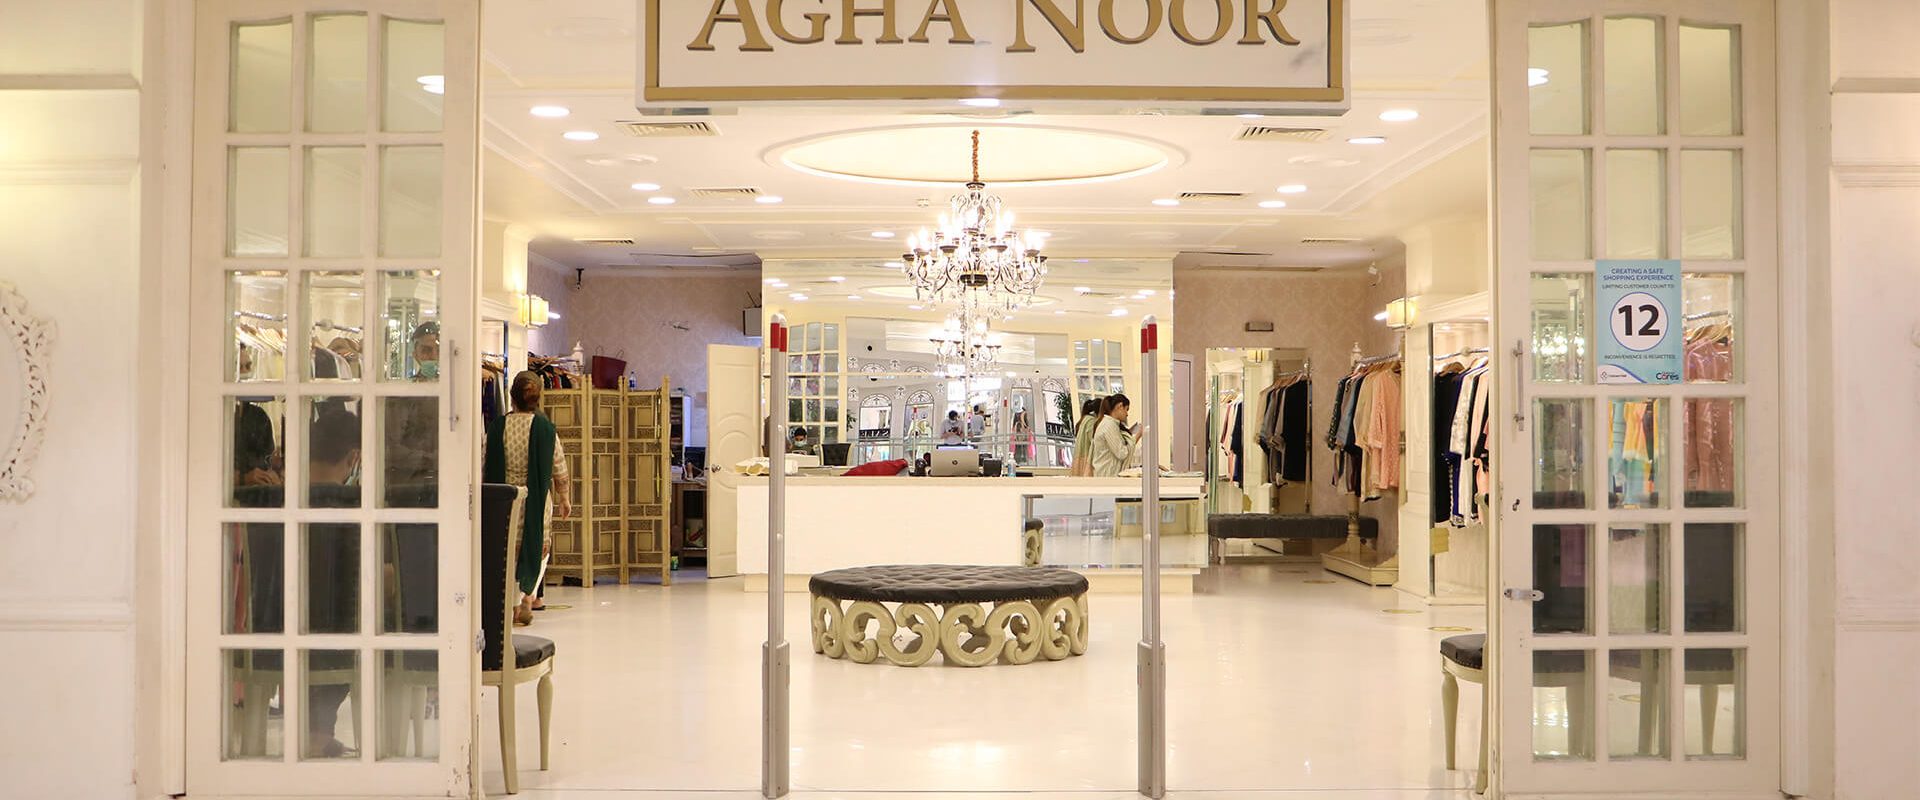 Agha Noor3